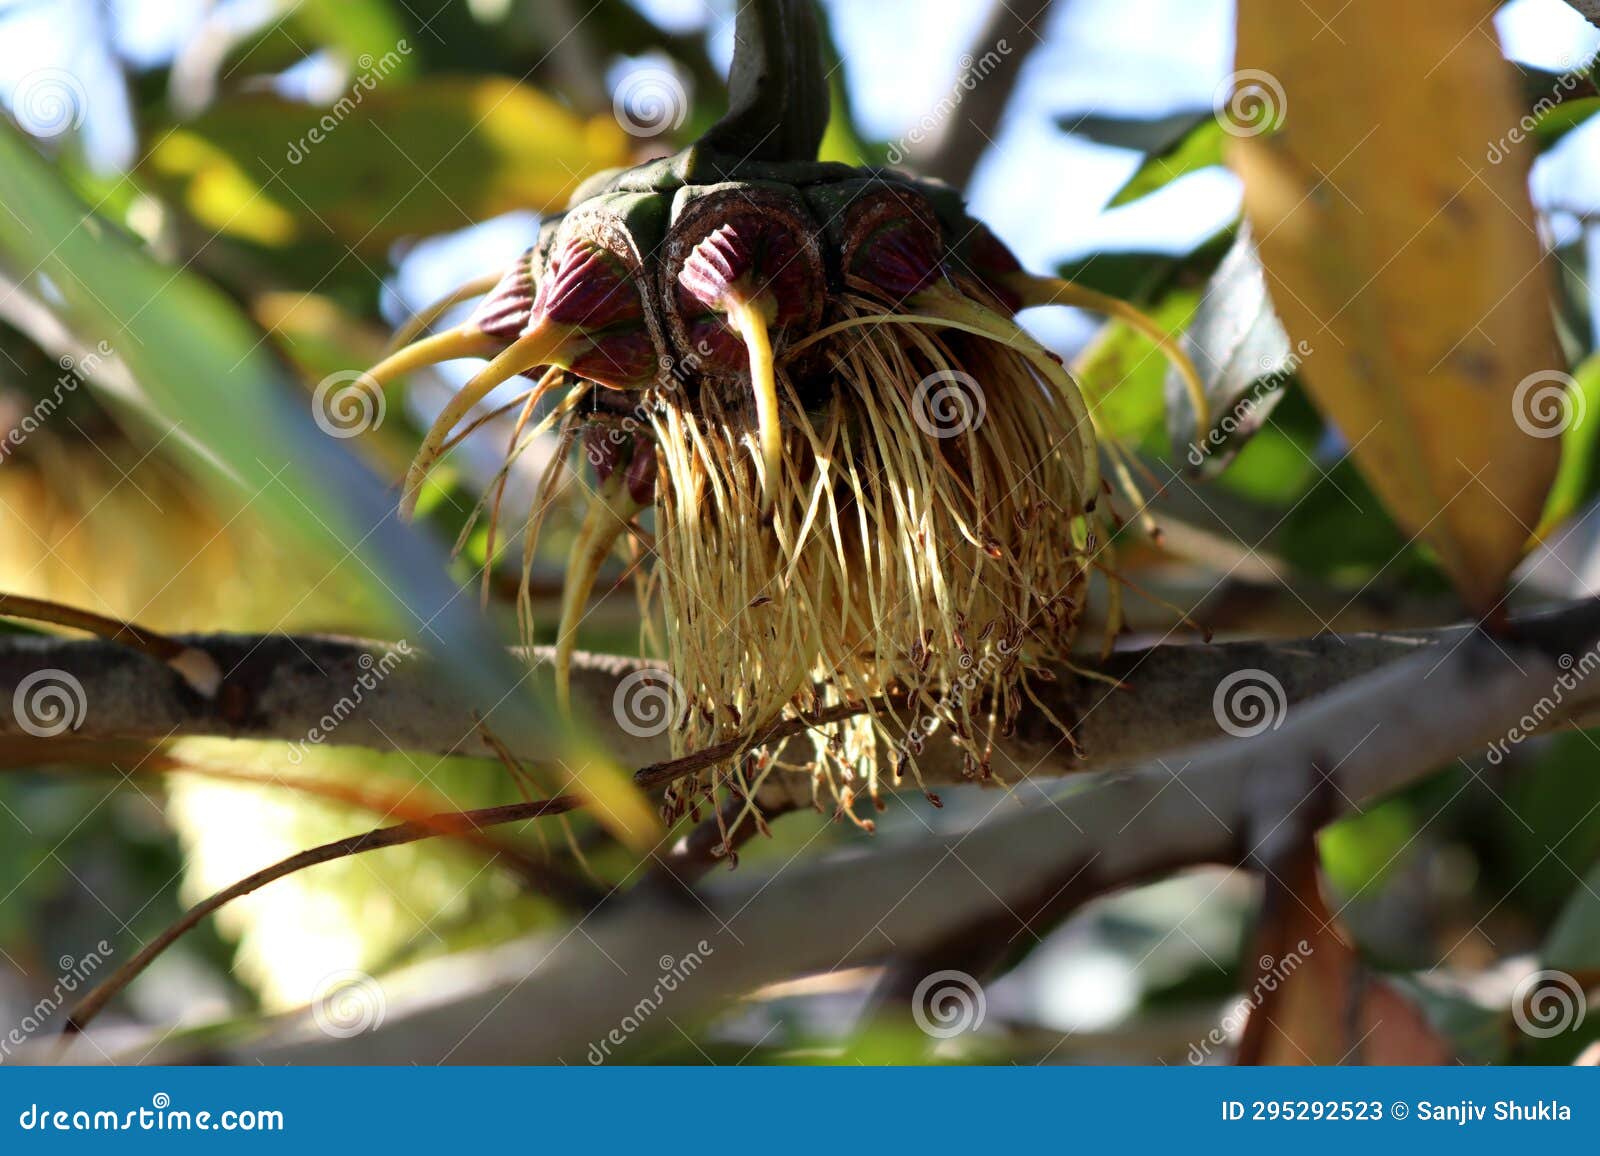 bushy yate (eucalyptus lehmannii) fruits with stamens still attached : (pix sanjiv shukla)